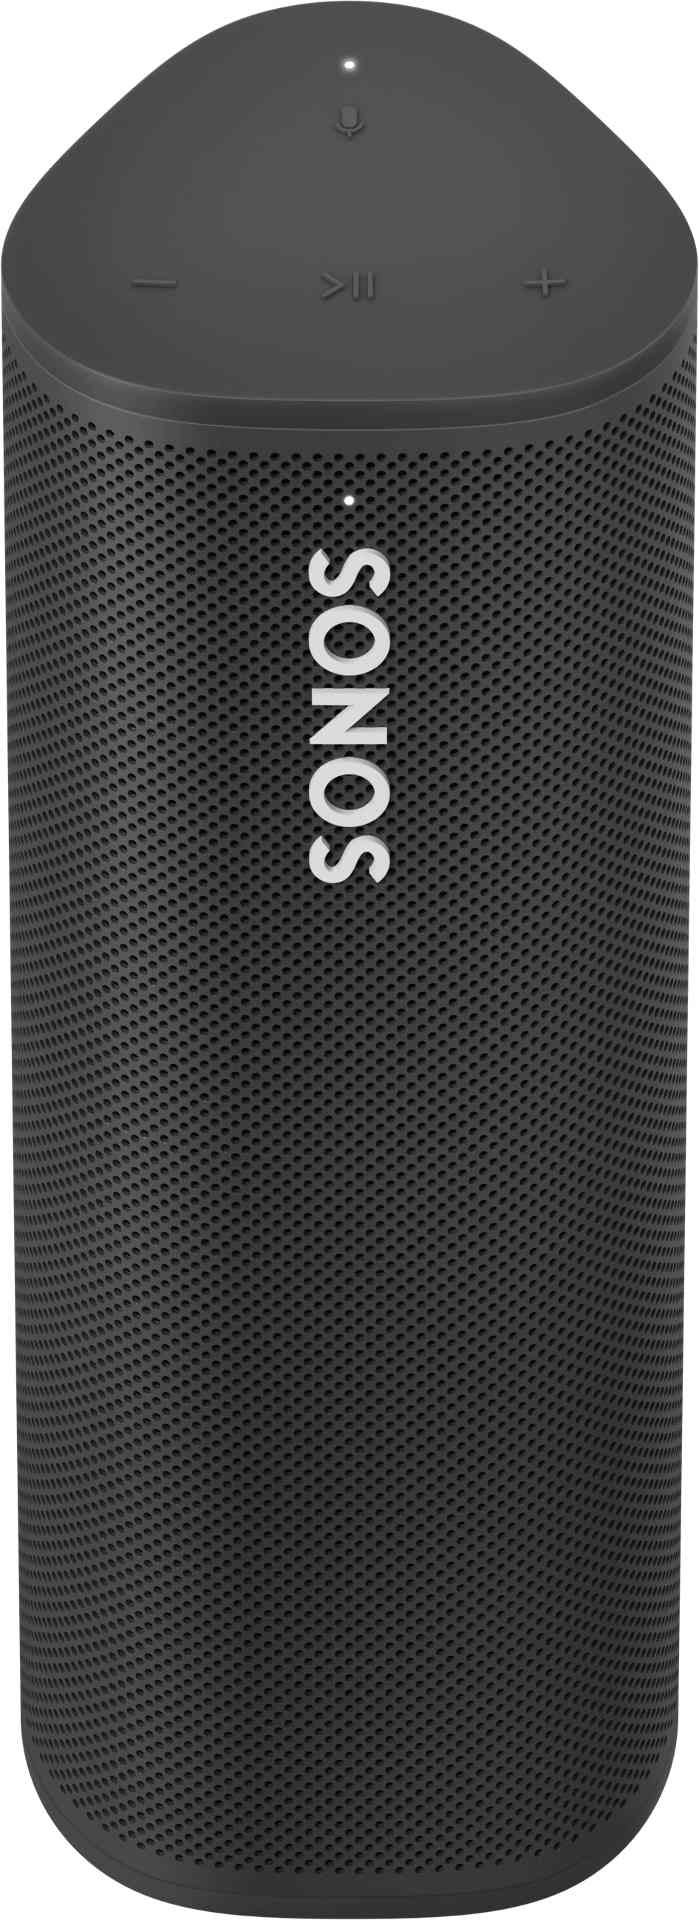 Sonos的便携式扬声器审查